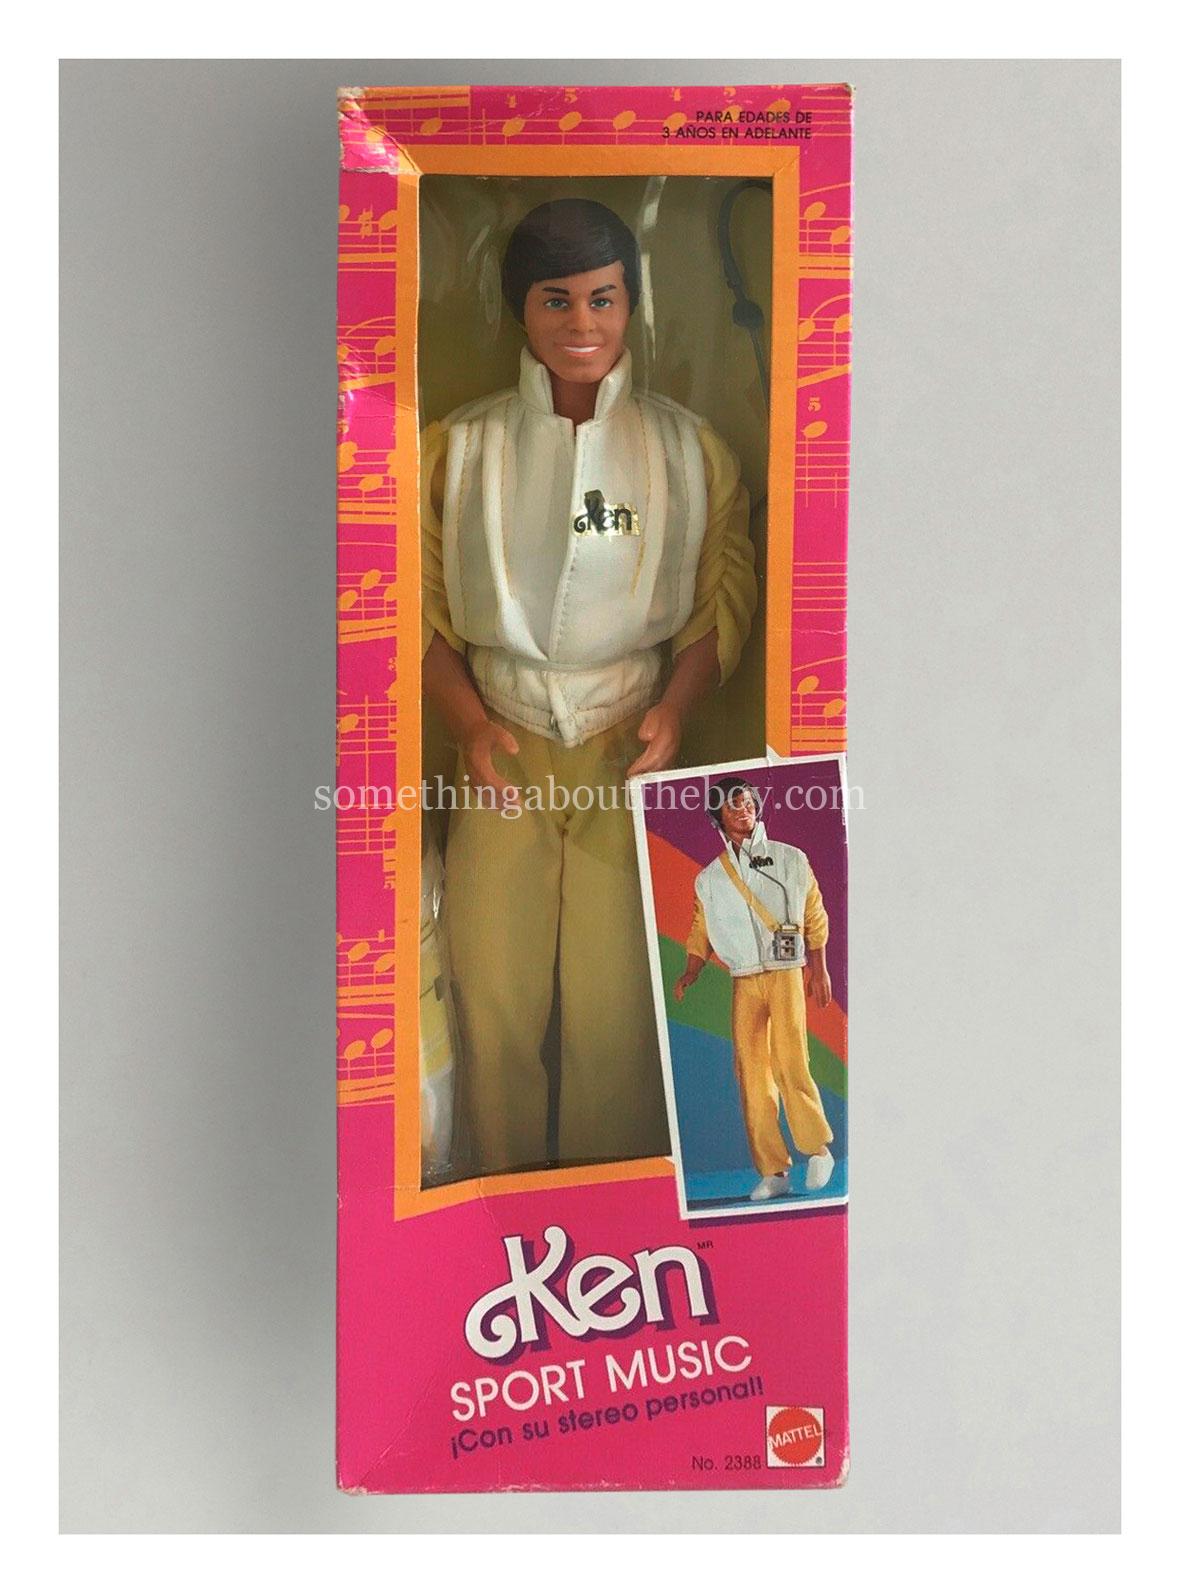 1986 #2388 Ken Sport Music (Mexican version) in original packaging